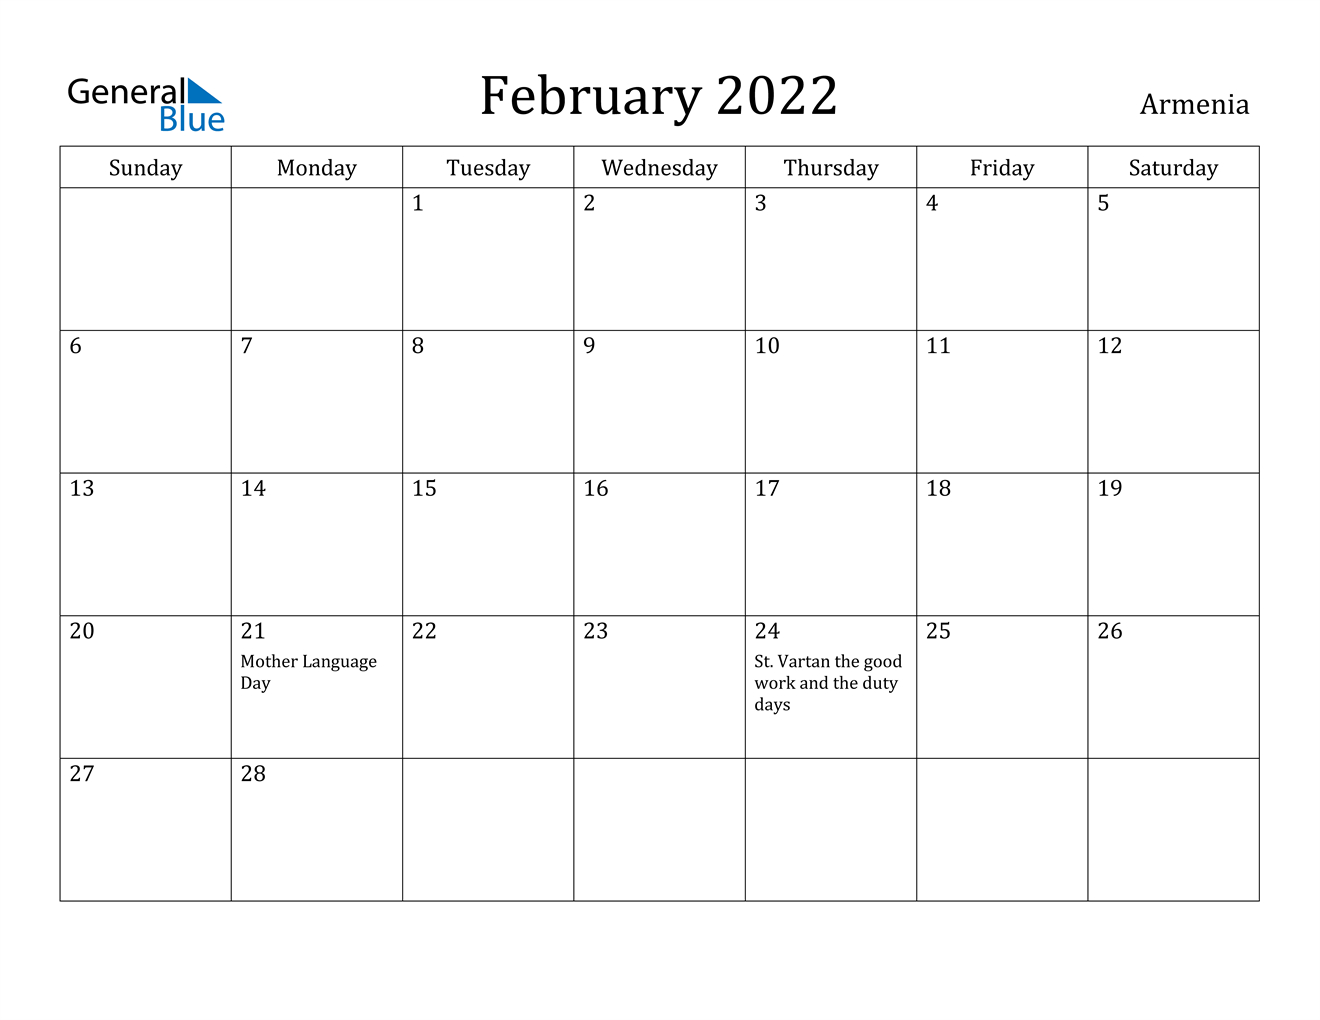 Armenia February 2022 Calendar With Holidays